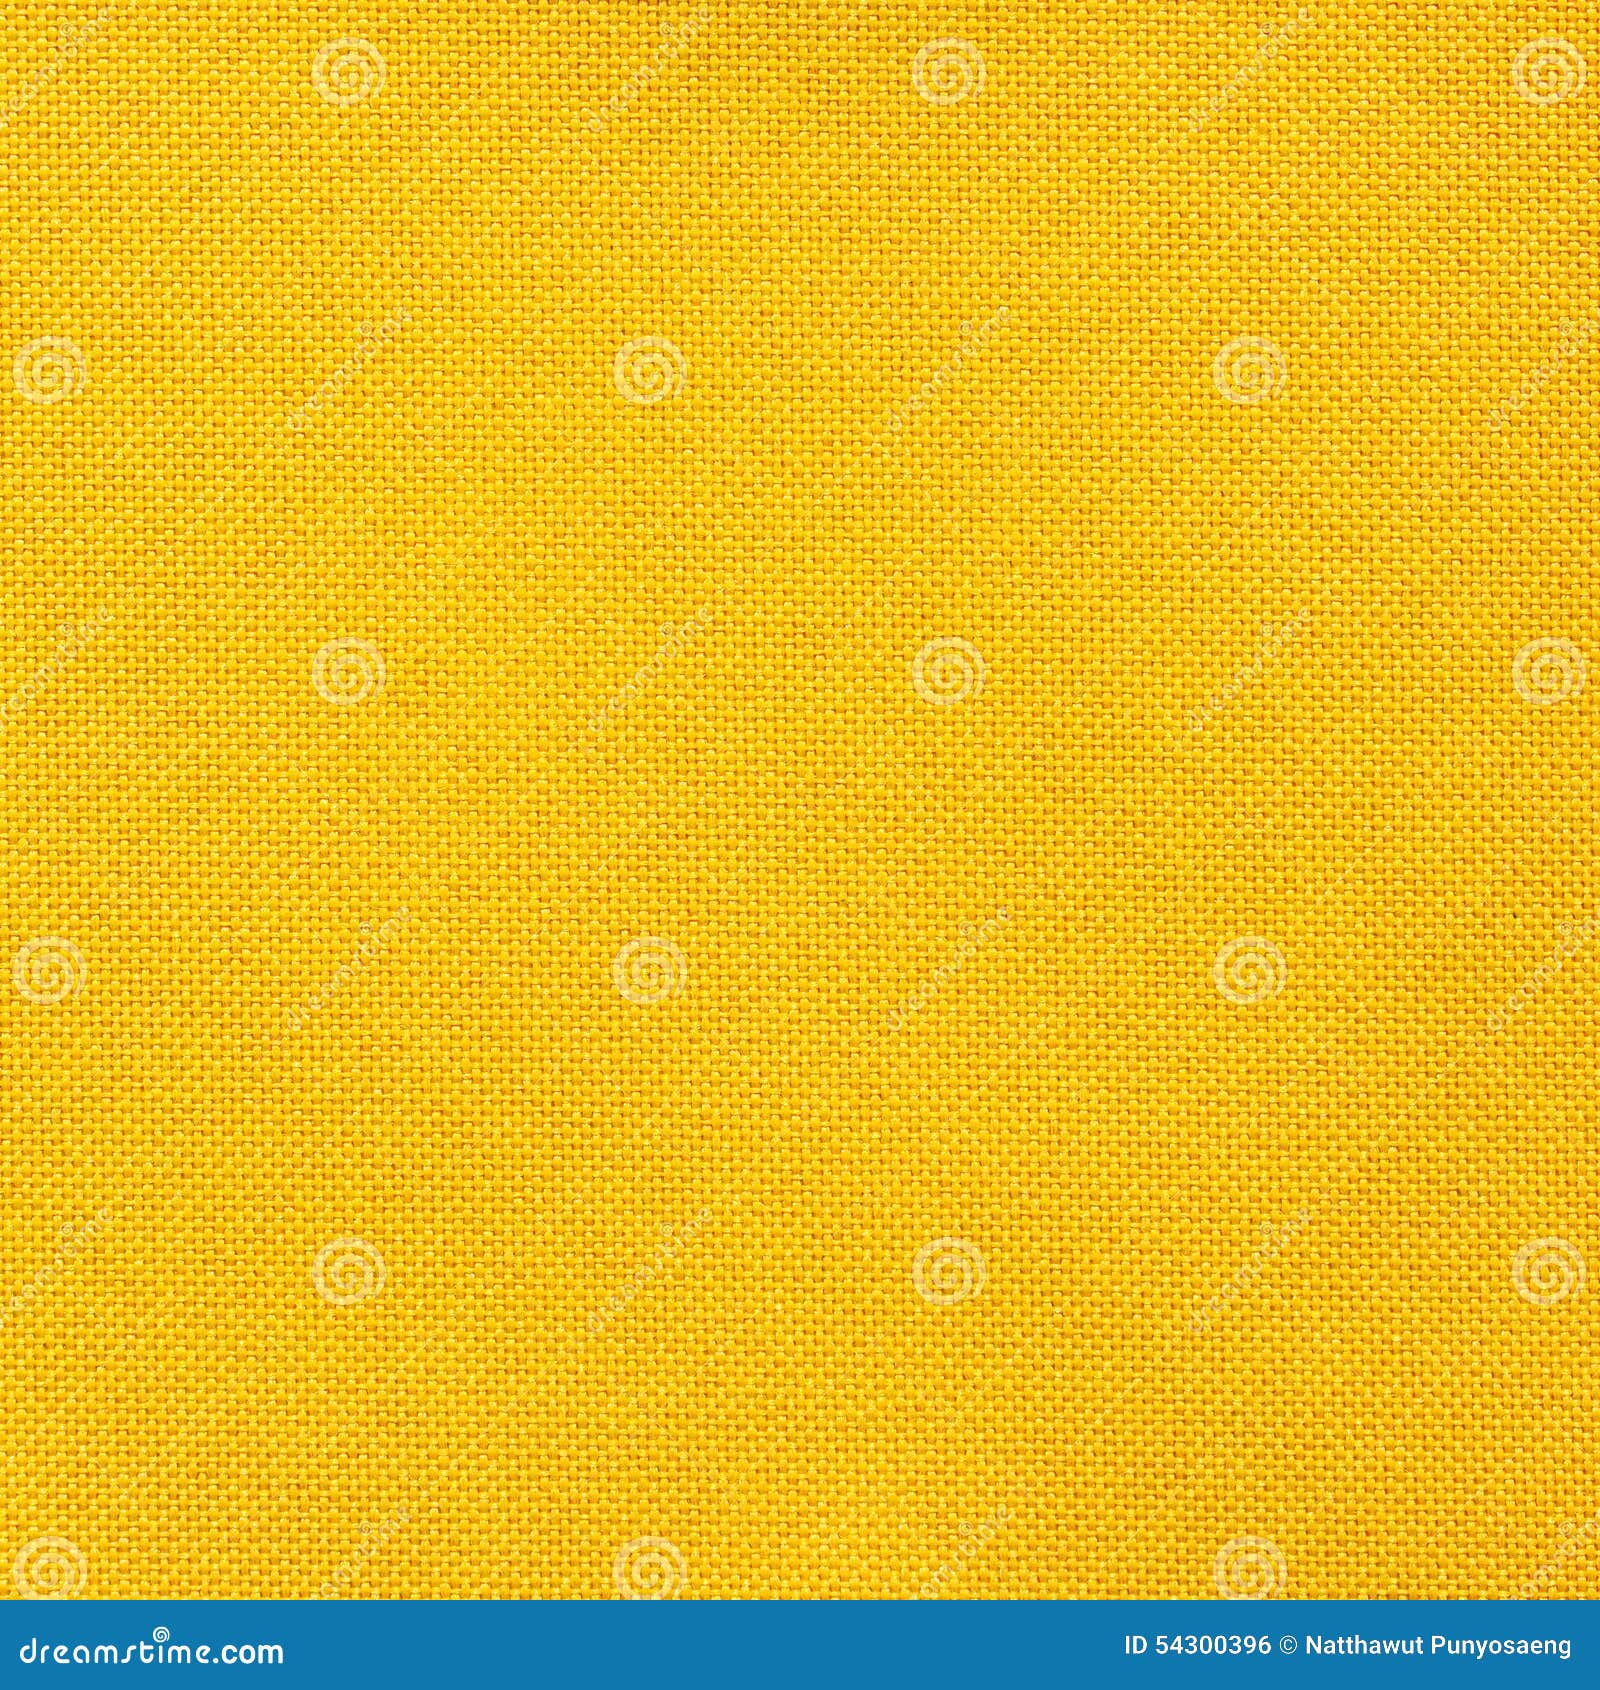 Seamless Yellow Fabric Background Stock Photo - Image of linen, pattern ...